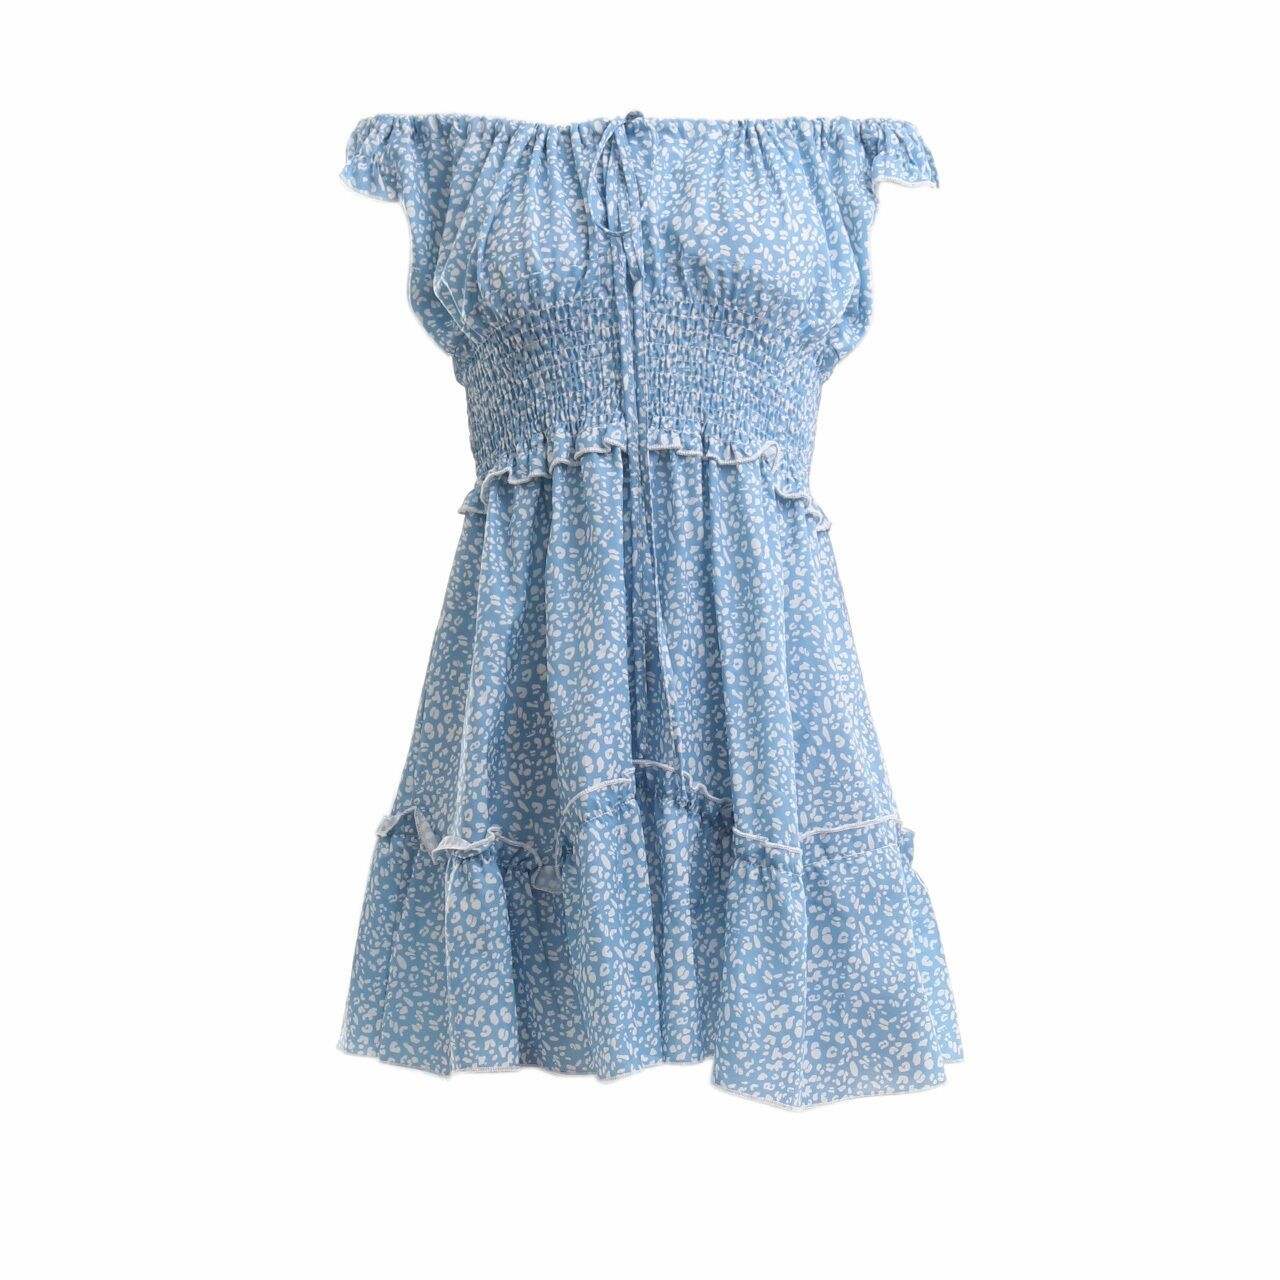 Zaful Blue Patterned Mini Dress